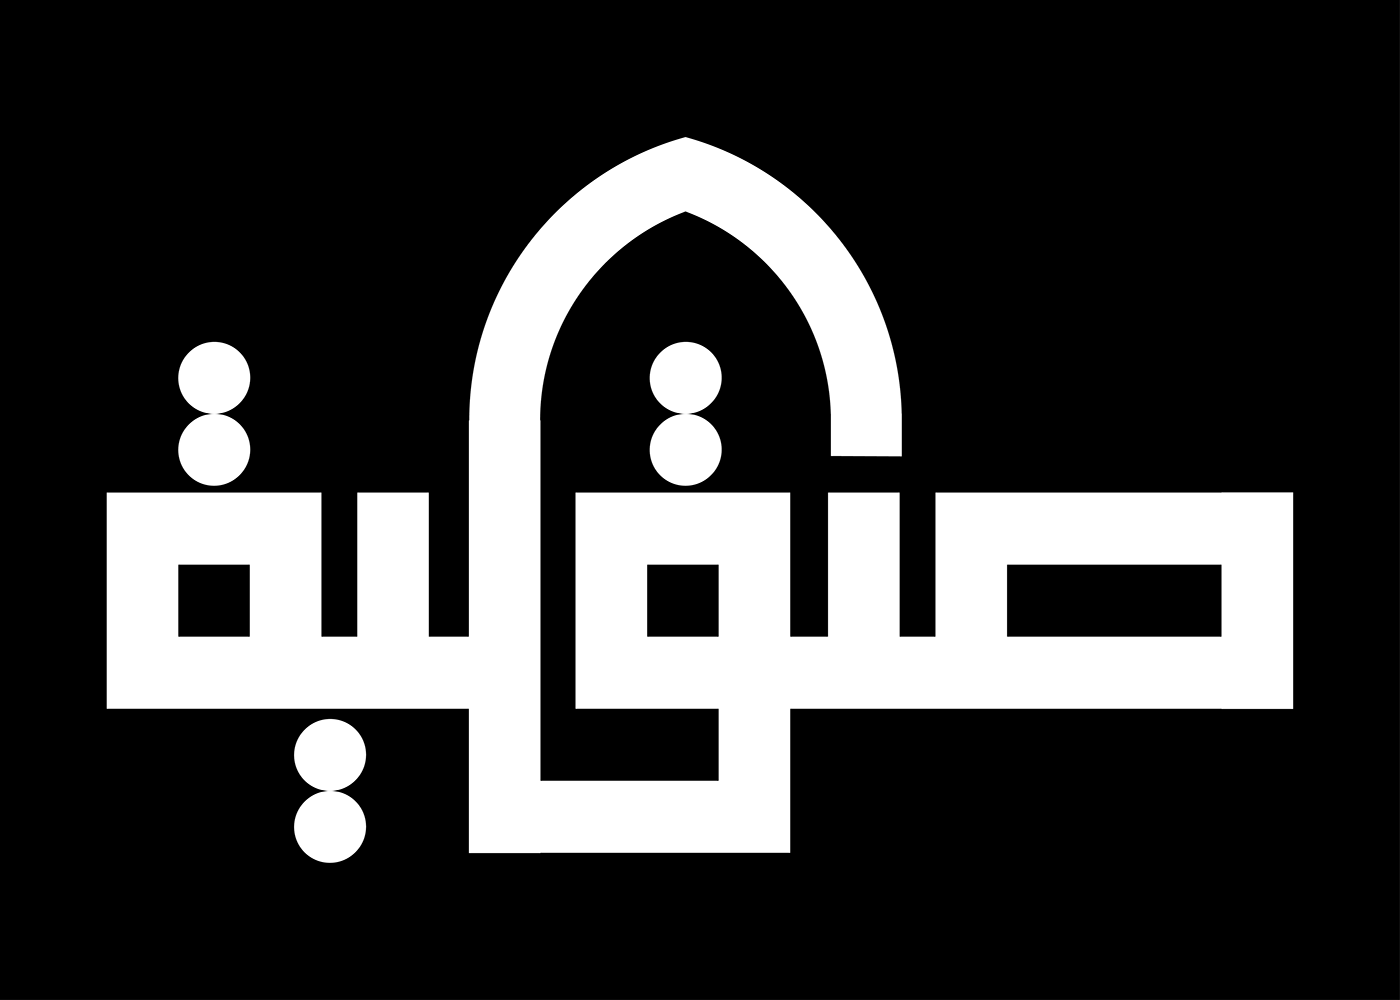 adobe illustrator Calligraphy   Handlettering Logo Design logos Logotype typography   arabiccalligraphy arabiclettering Arabictypography